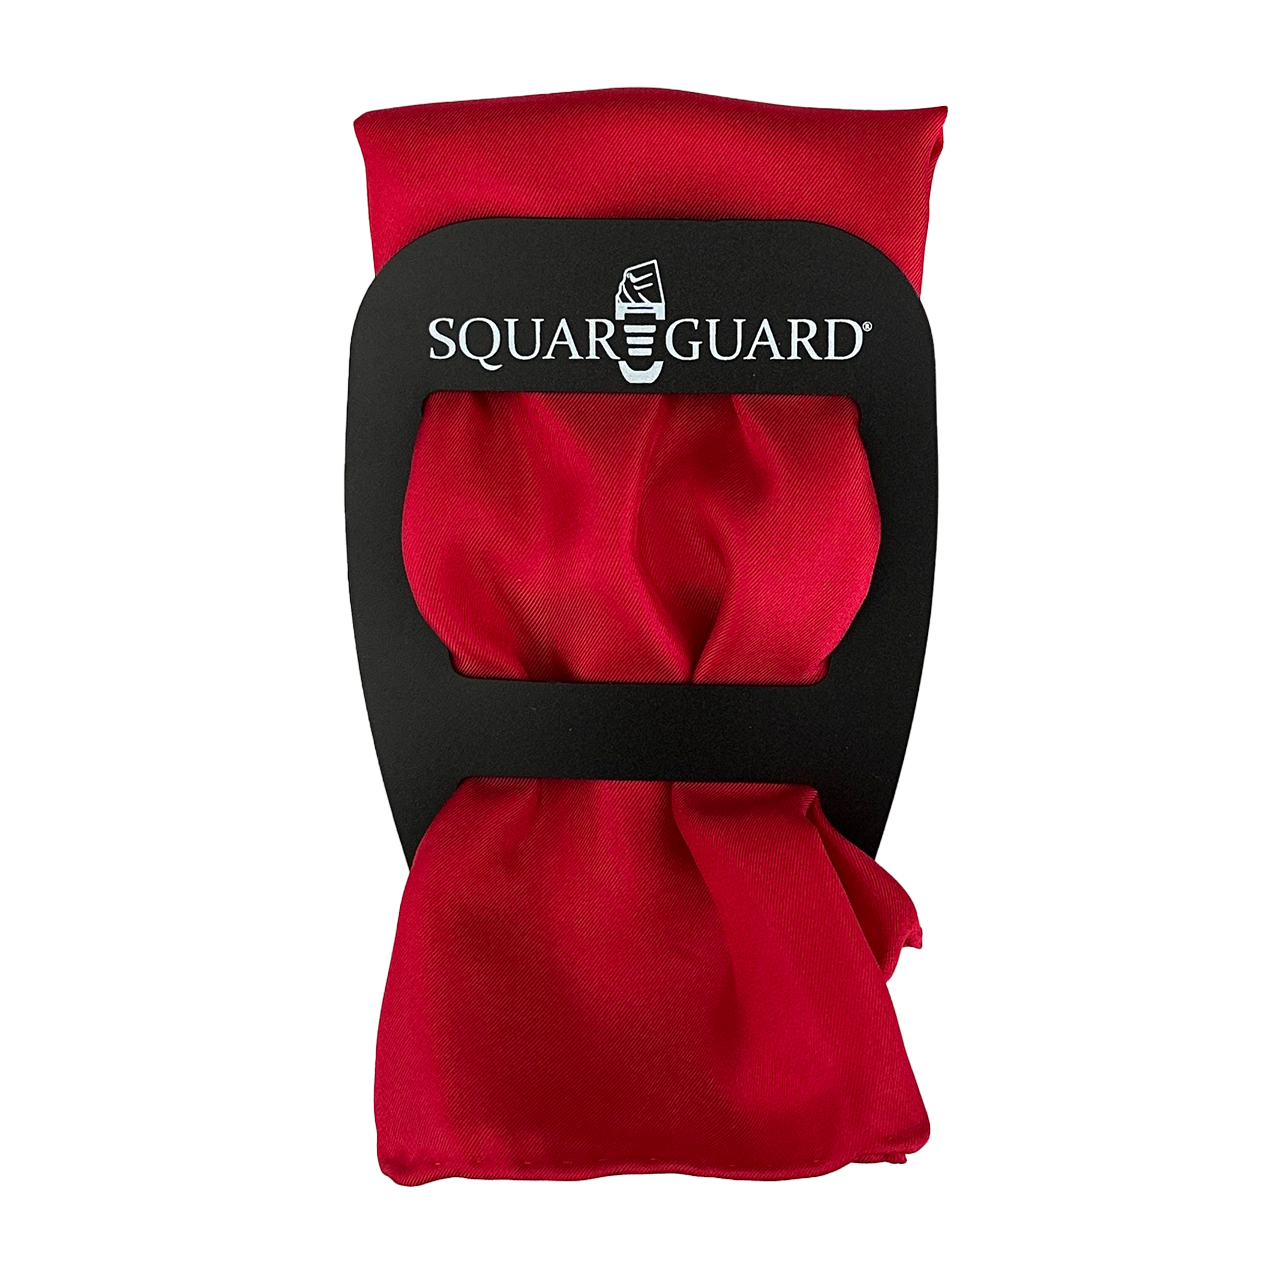 Red Pocket Square + SquareGuard